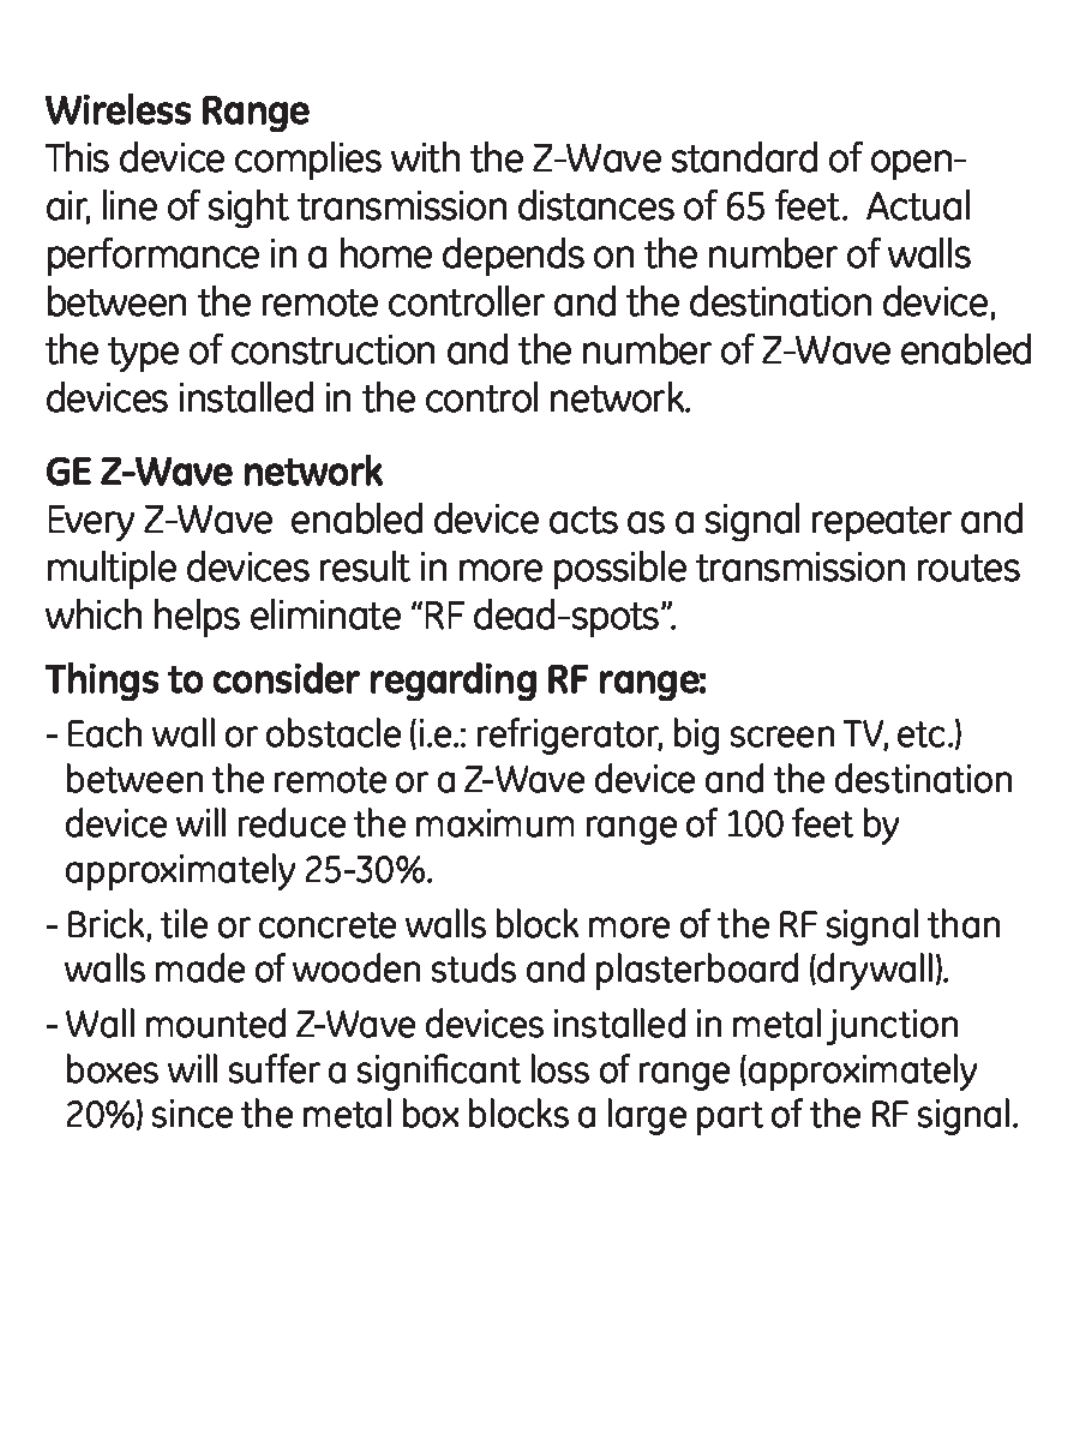 Jasco ZWAVEKIT manual Wireless Range, GE Z-Wavenetwork, Things to consider regarding RF range 